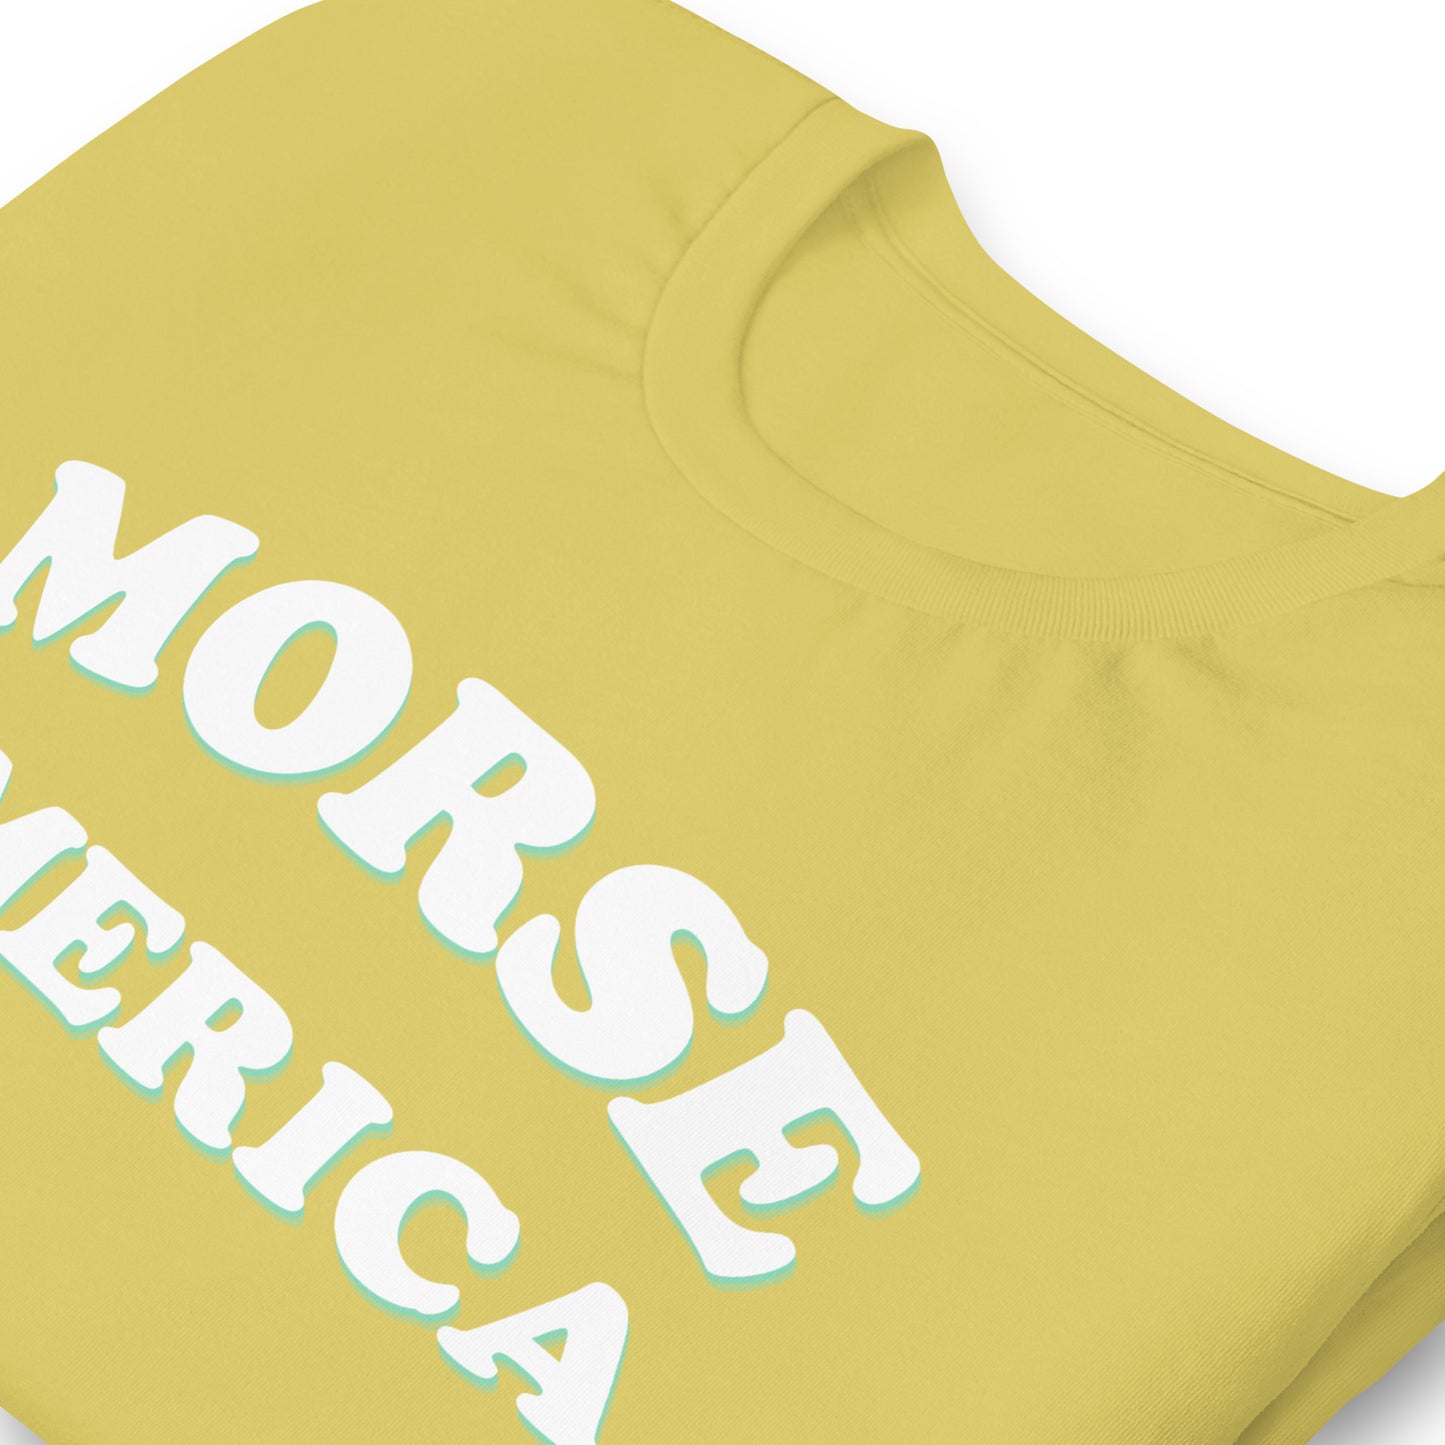 Morse America T-Shirt